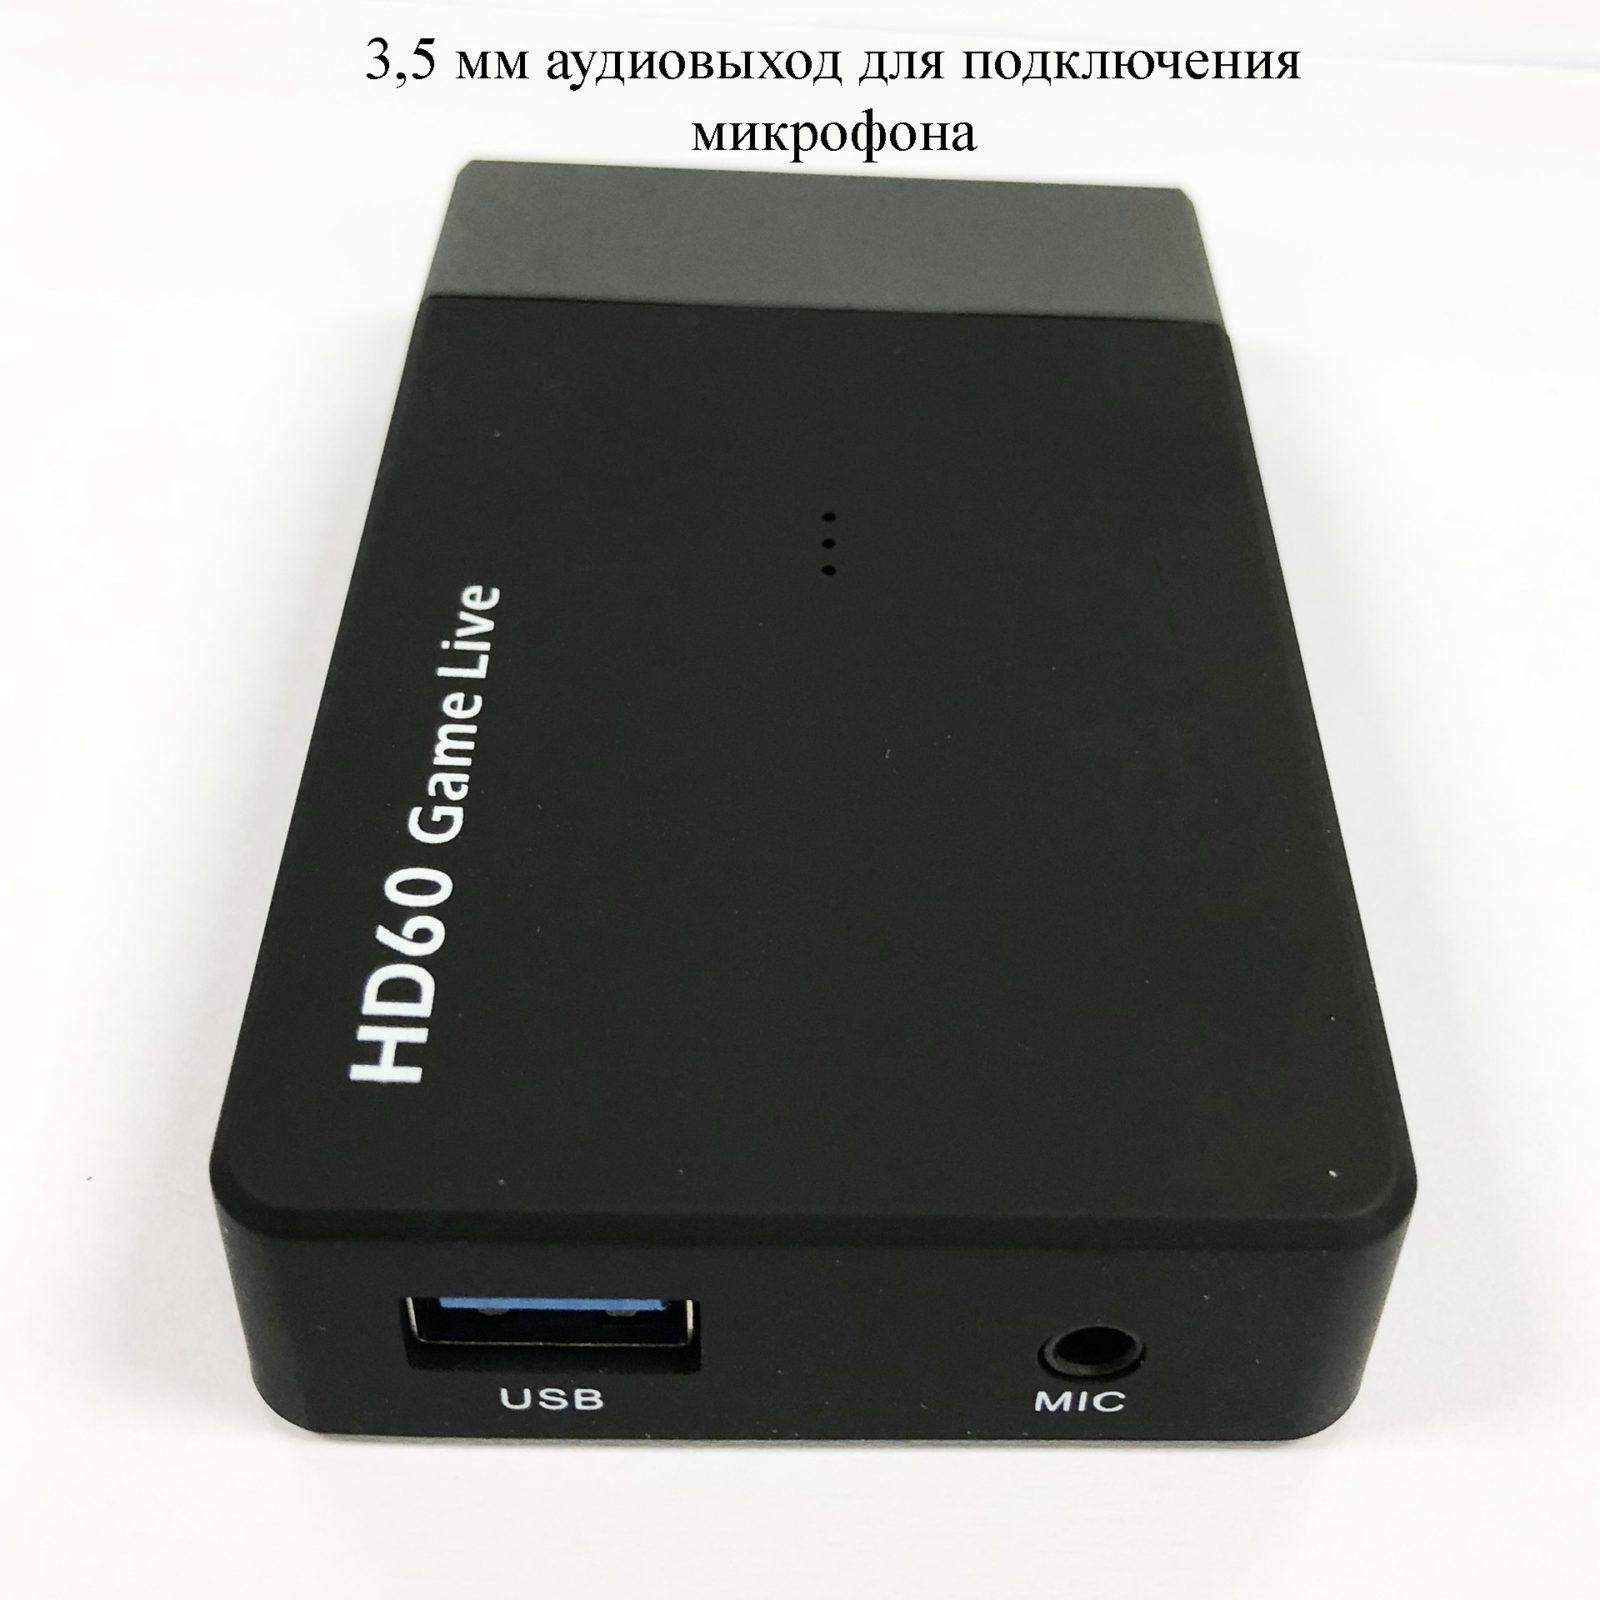 9010983757 869224906 1 - Внешнее устройство видеозахвата (цифровой видеорекордер) Ezcap 261M HD60: запись видео 1080р 60 FPS, USB 3.0, оцифровка видеокассет